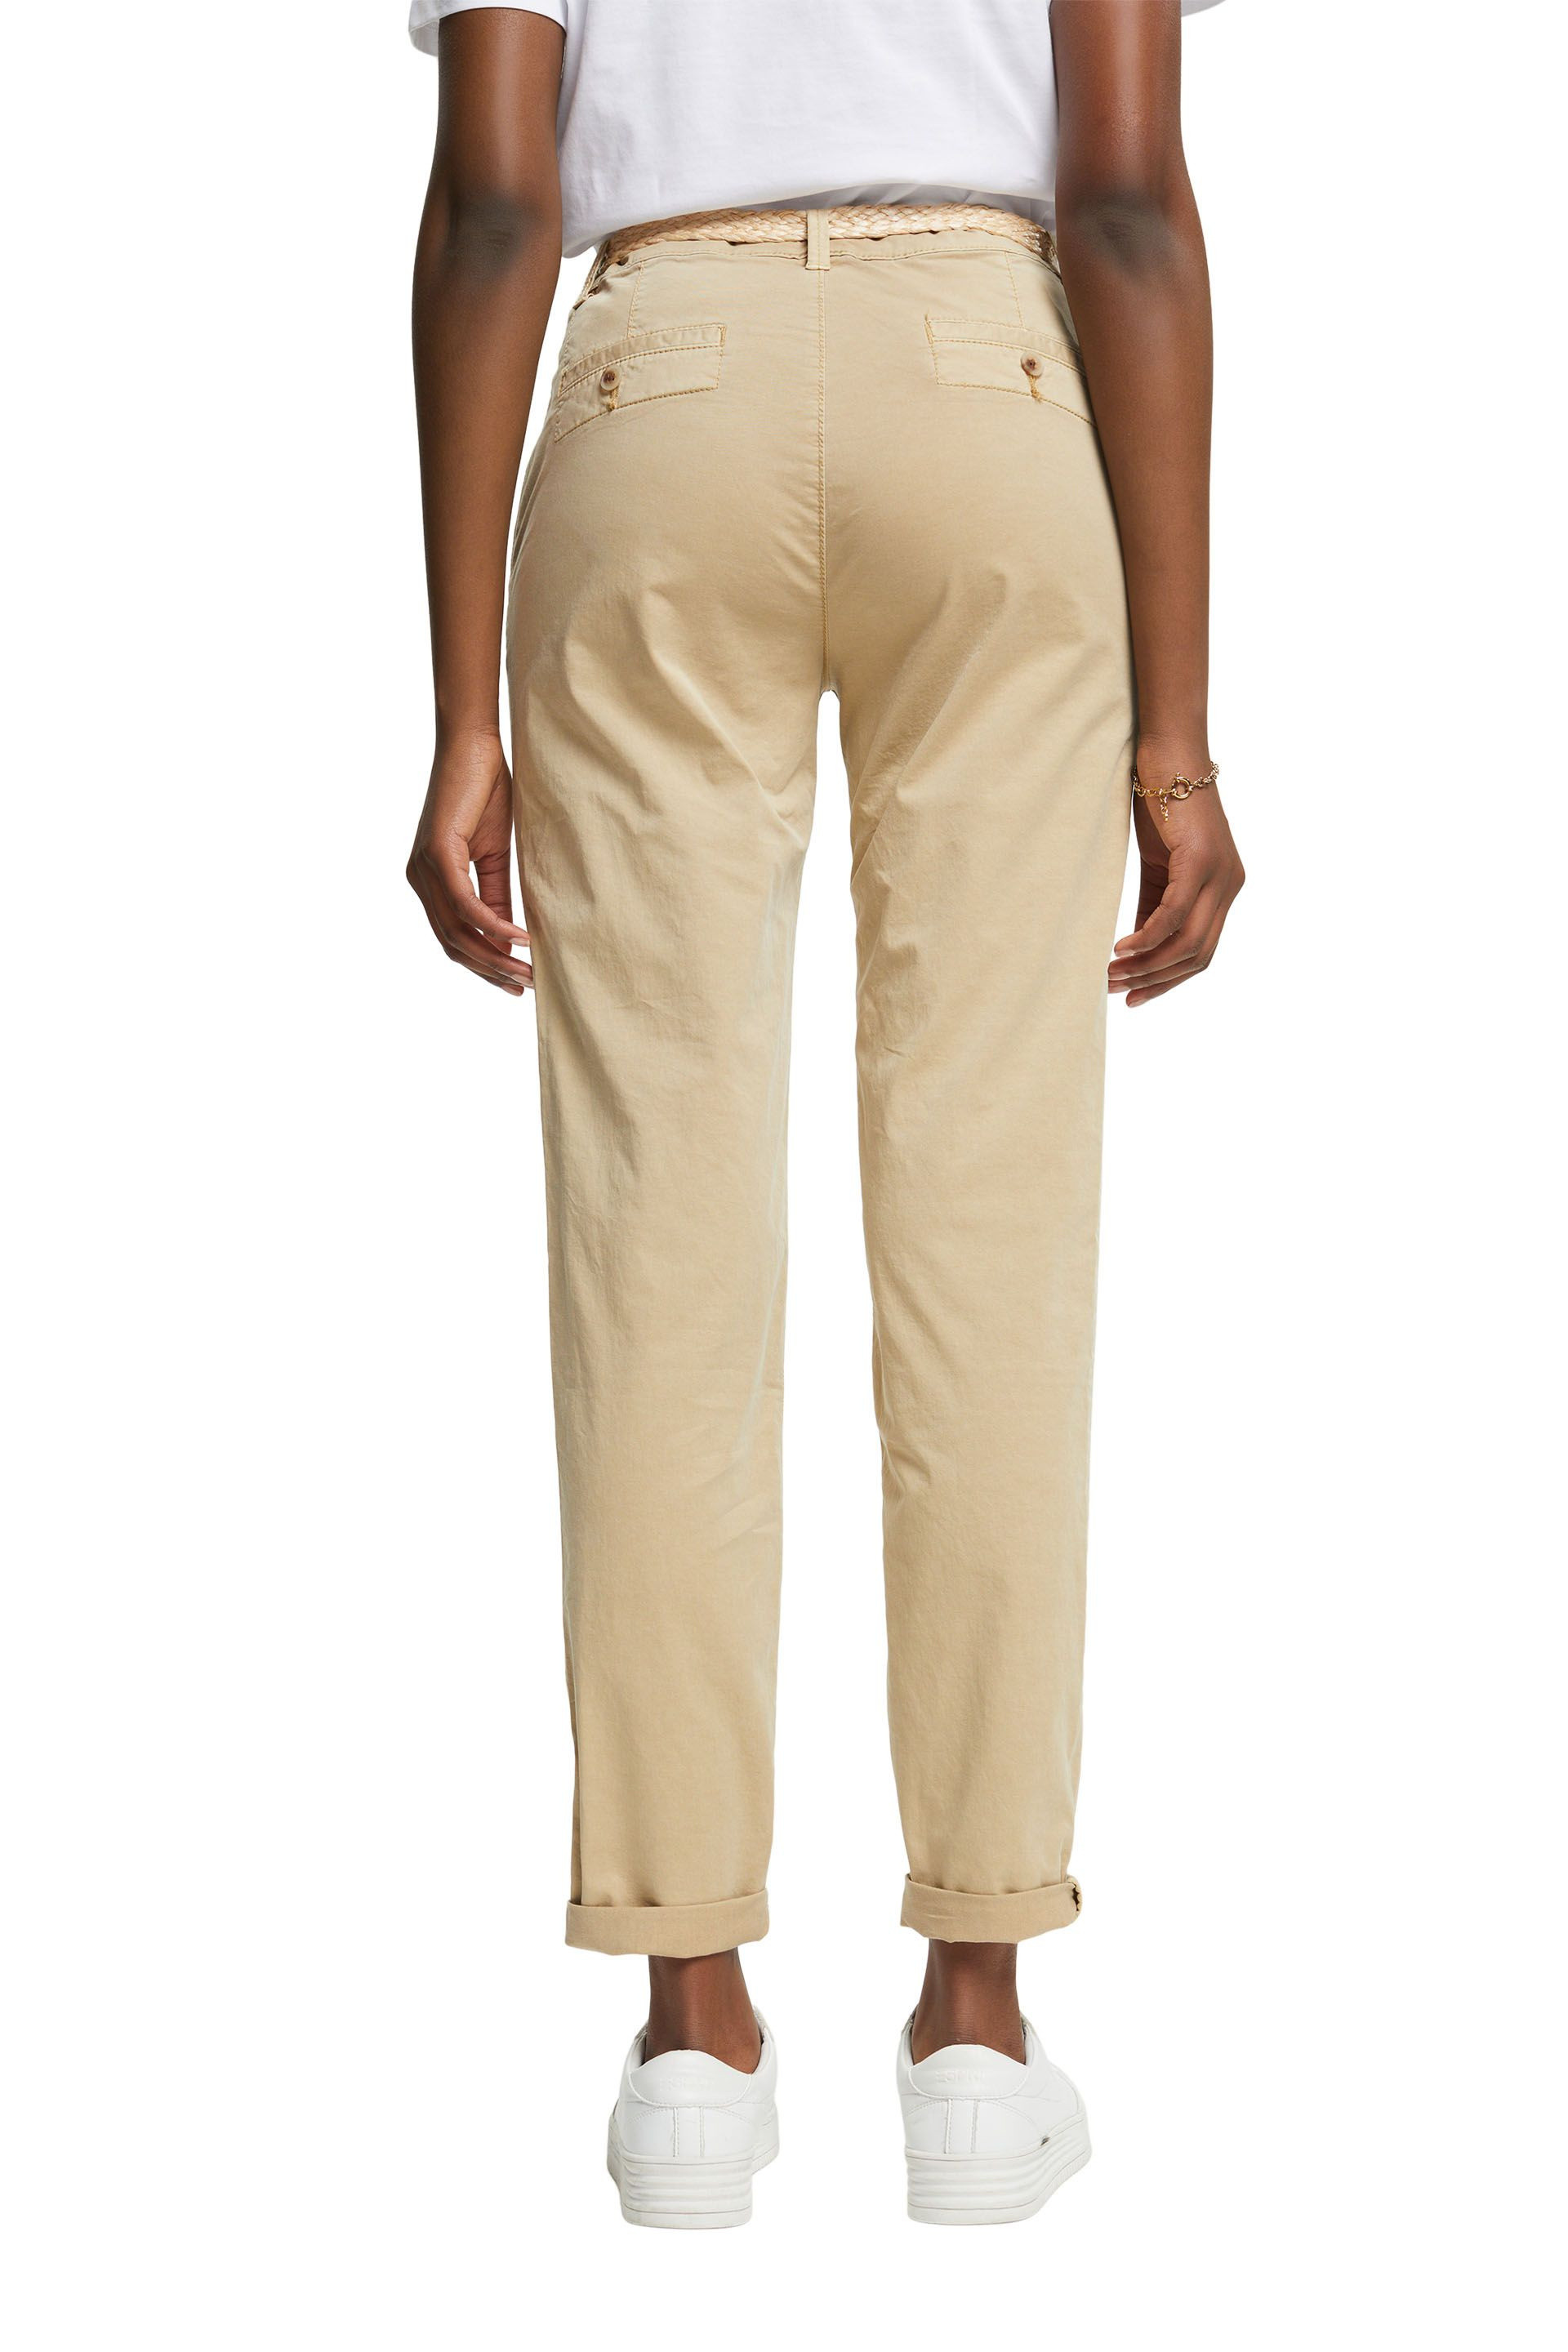 Esprit - Pantaloni chino cropped con cintura, Sabbia, large image number 2